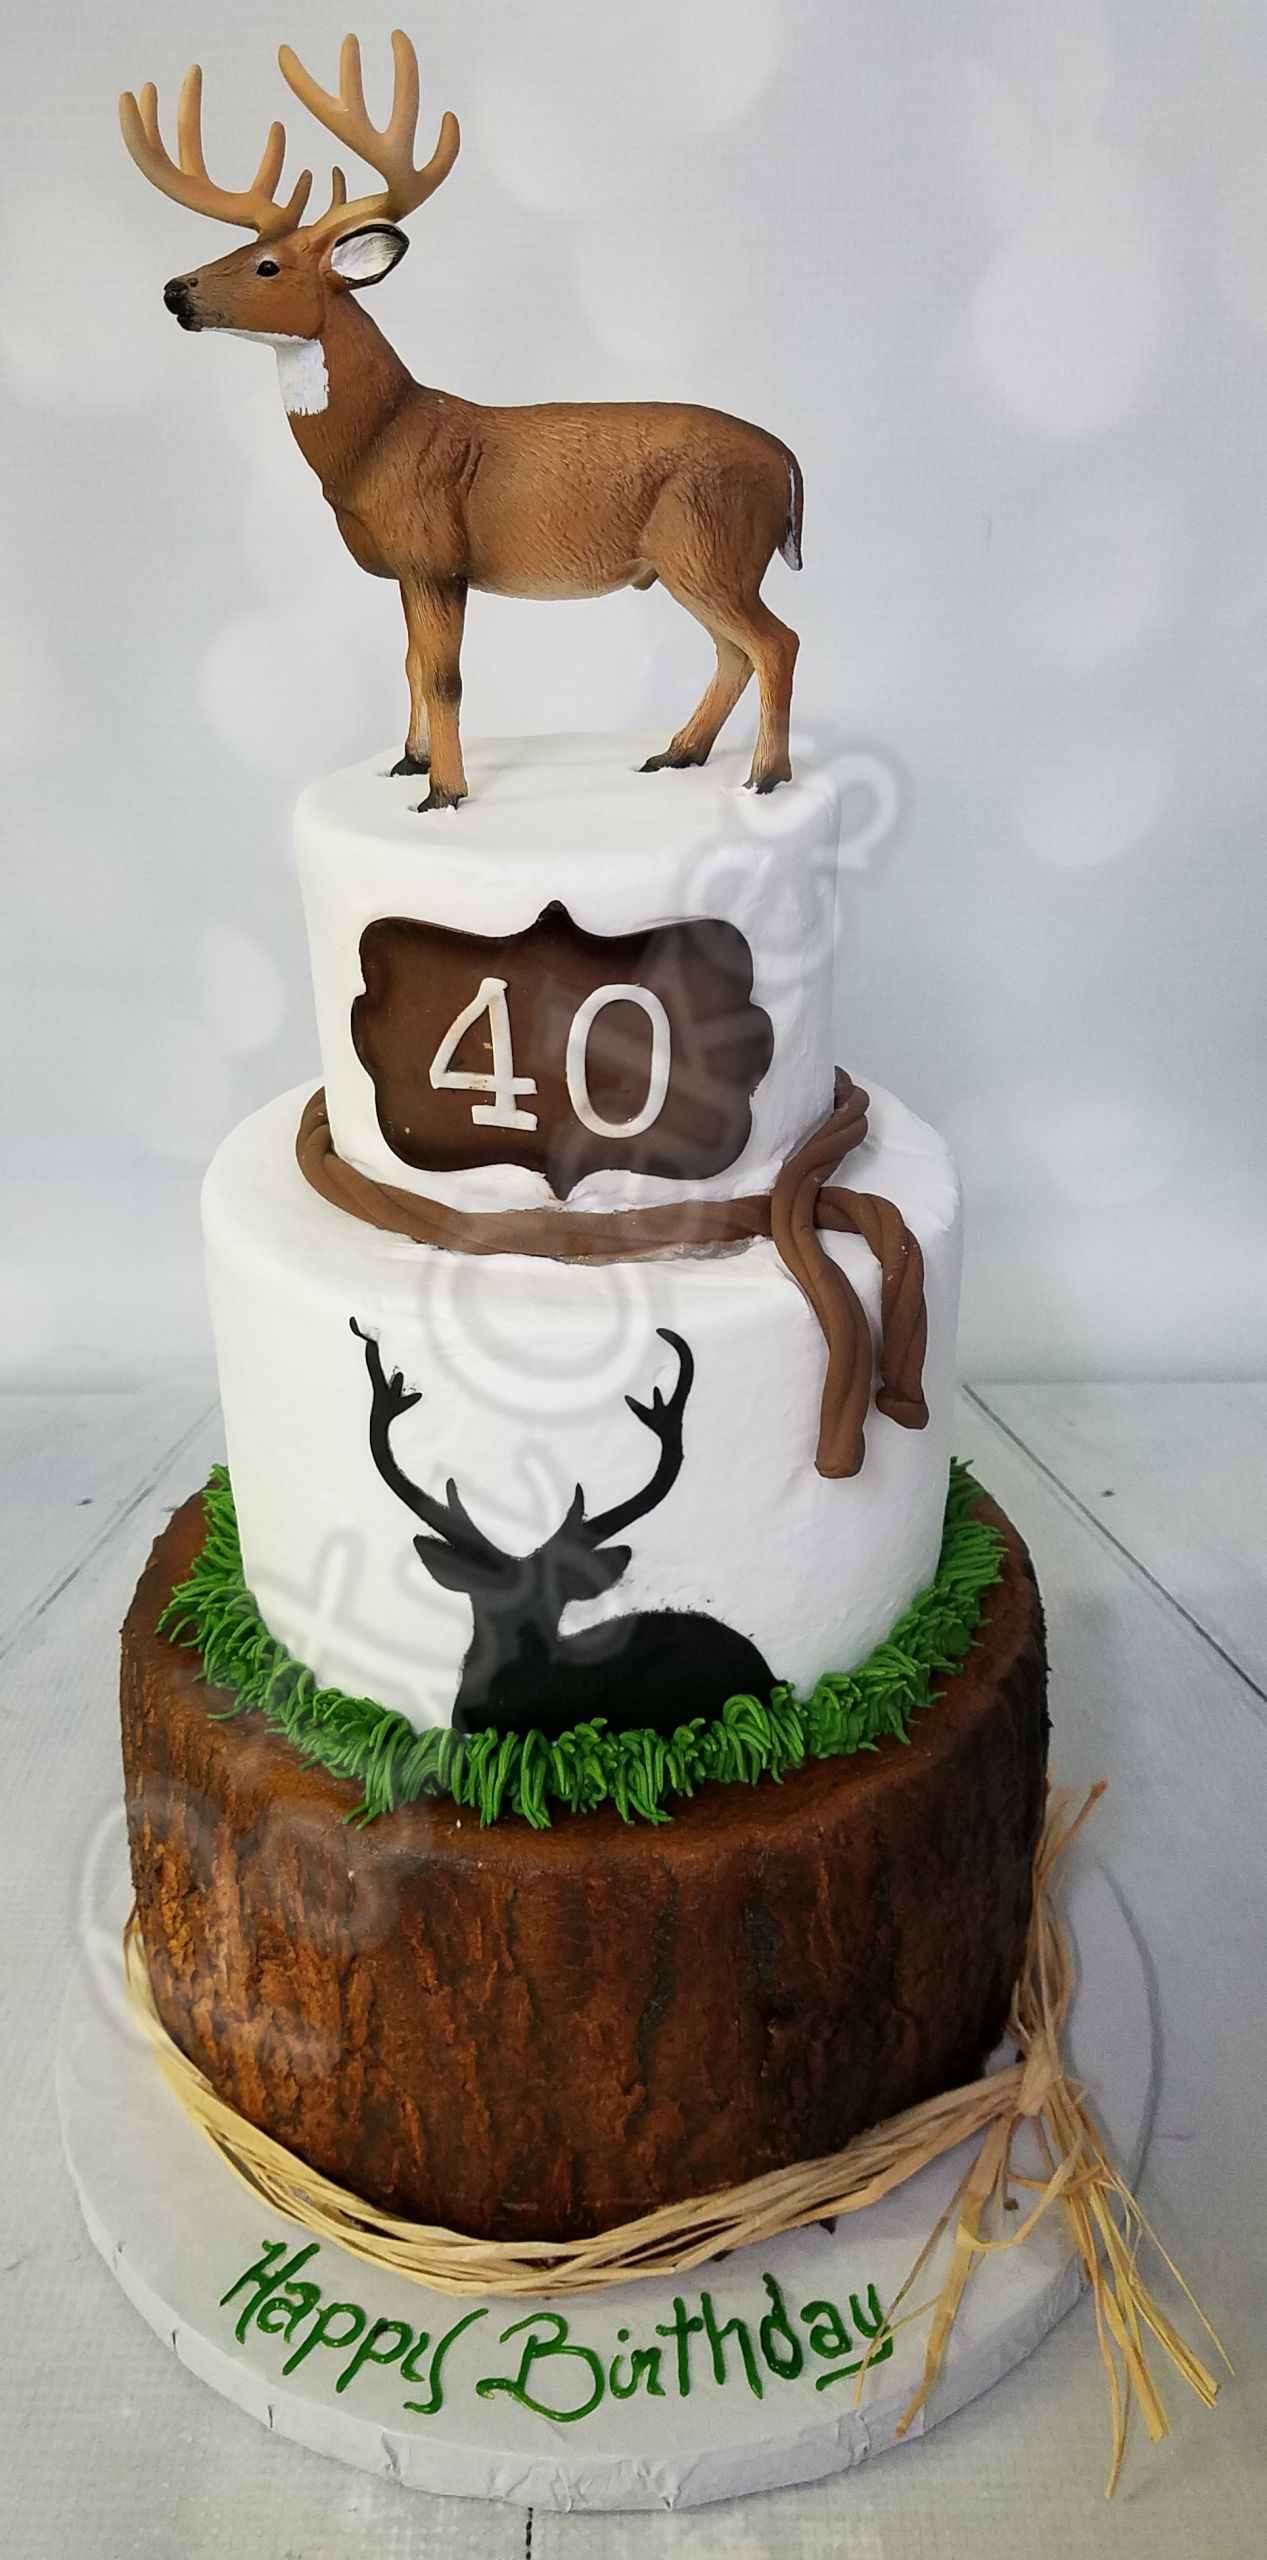 Deer Birthday Cake
 Deer 03 – Patty Cakes – Highland IL